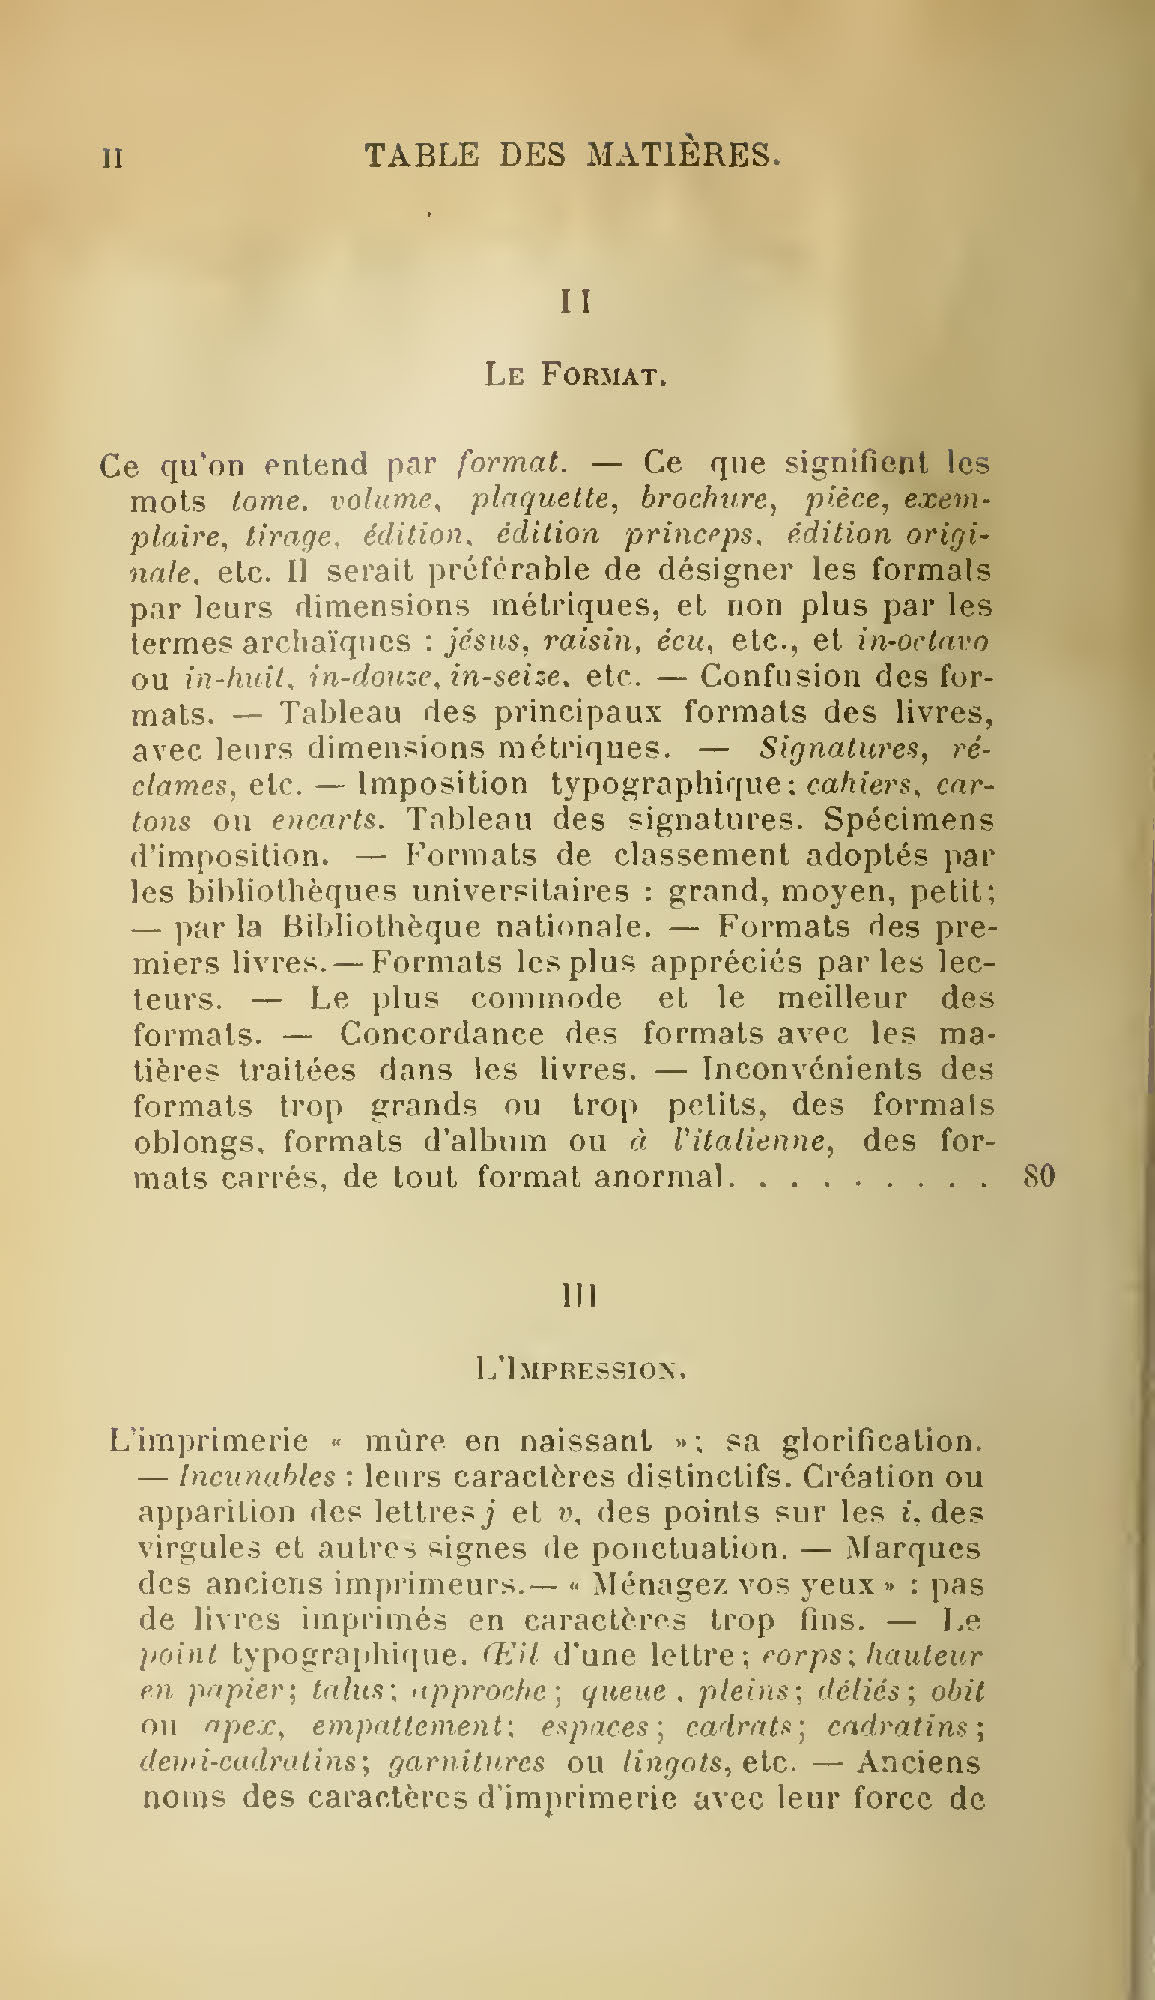 Albert Cim, Le Livre, t. III, p. II.